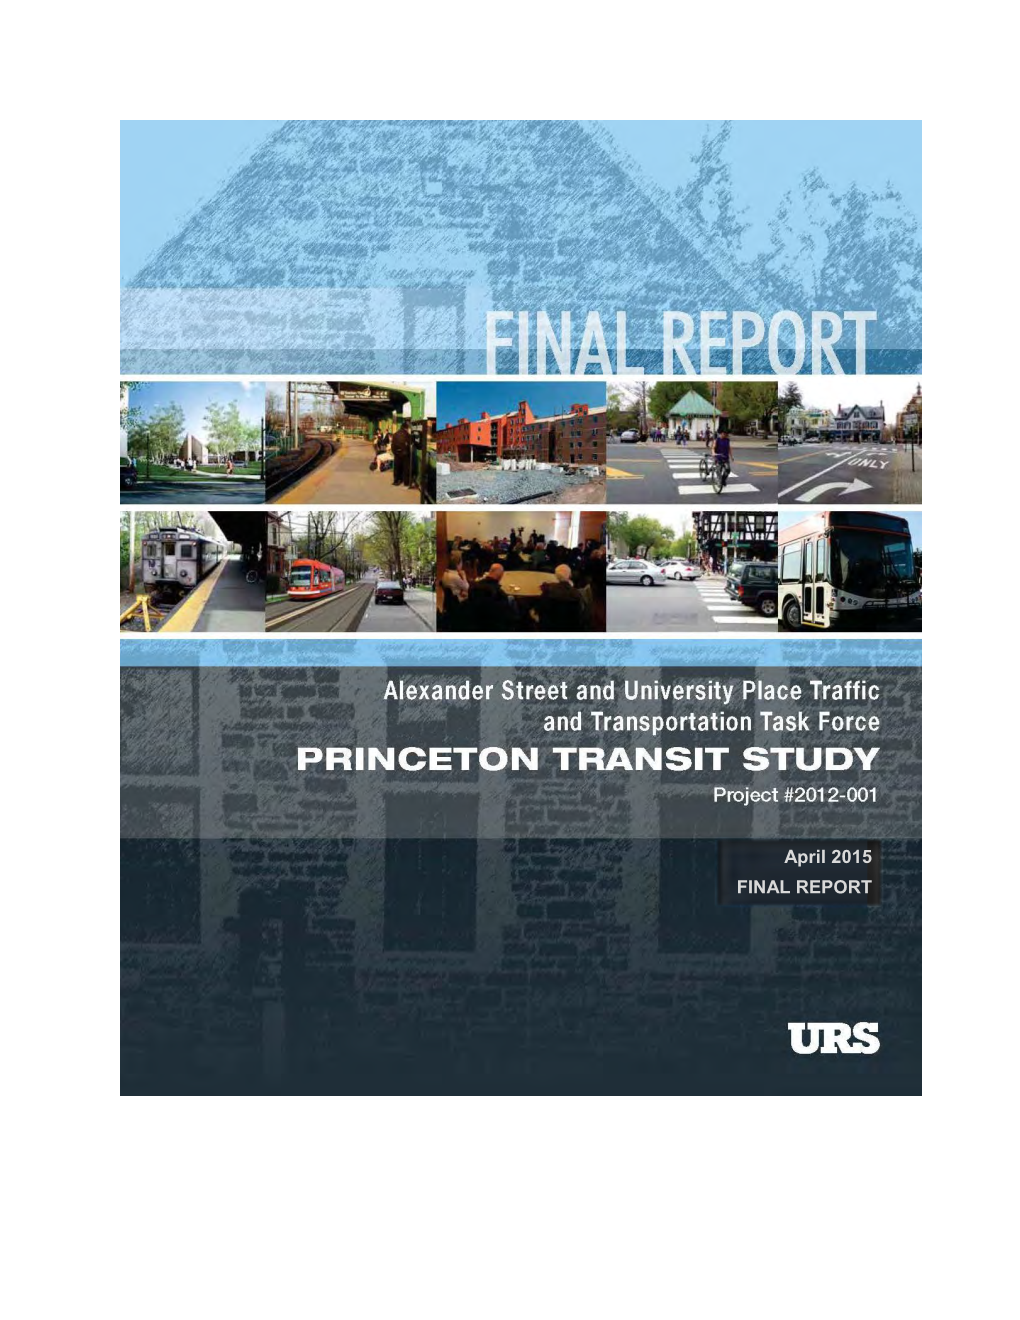 University Place Transit Study Final Report